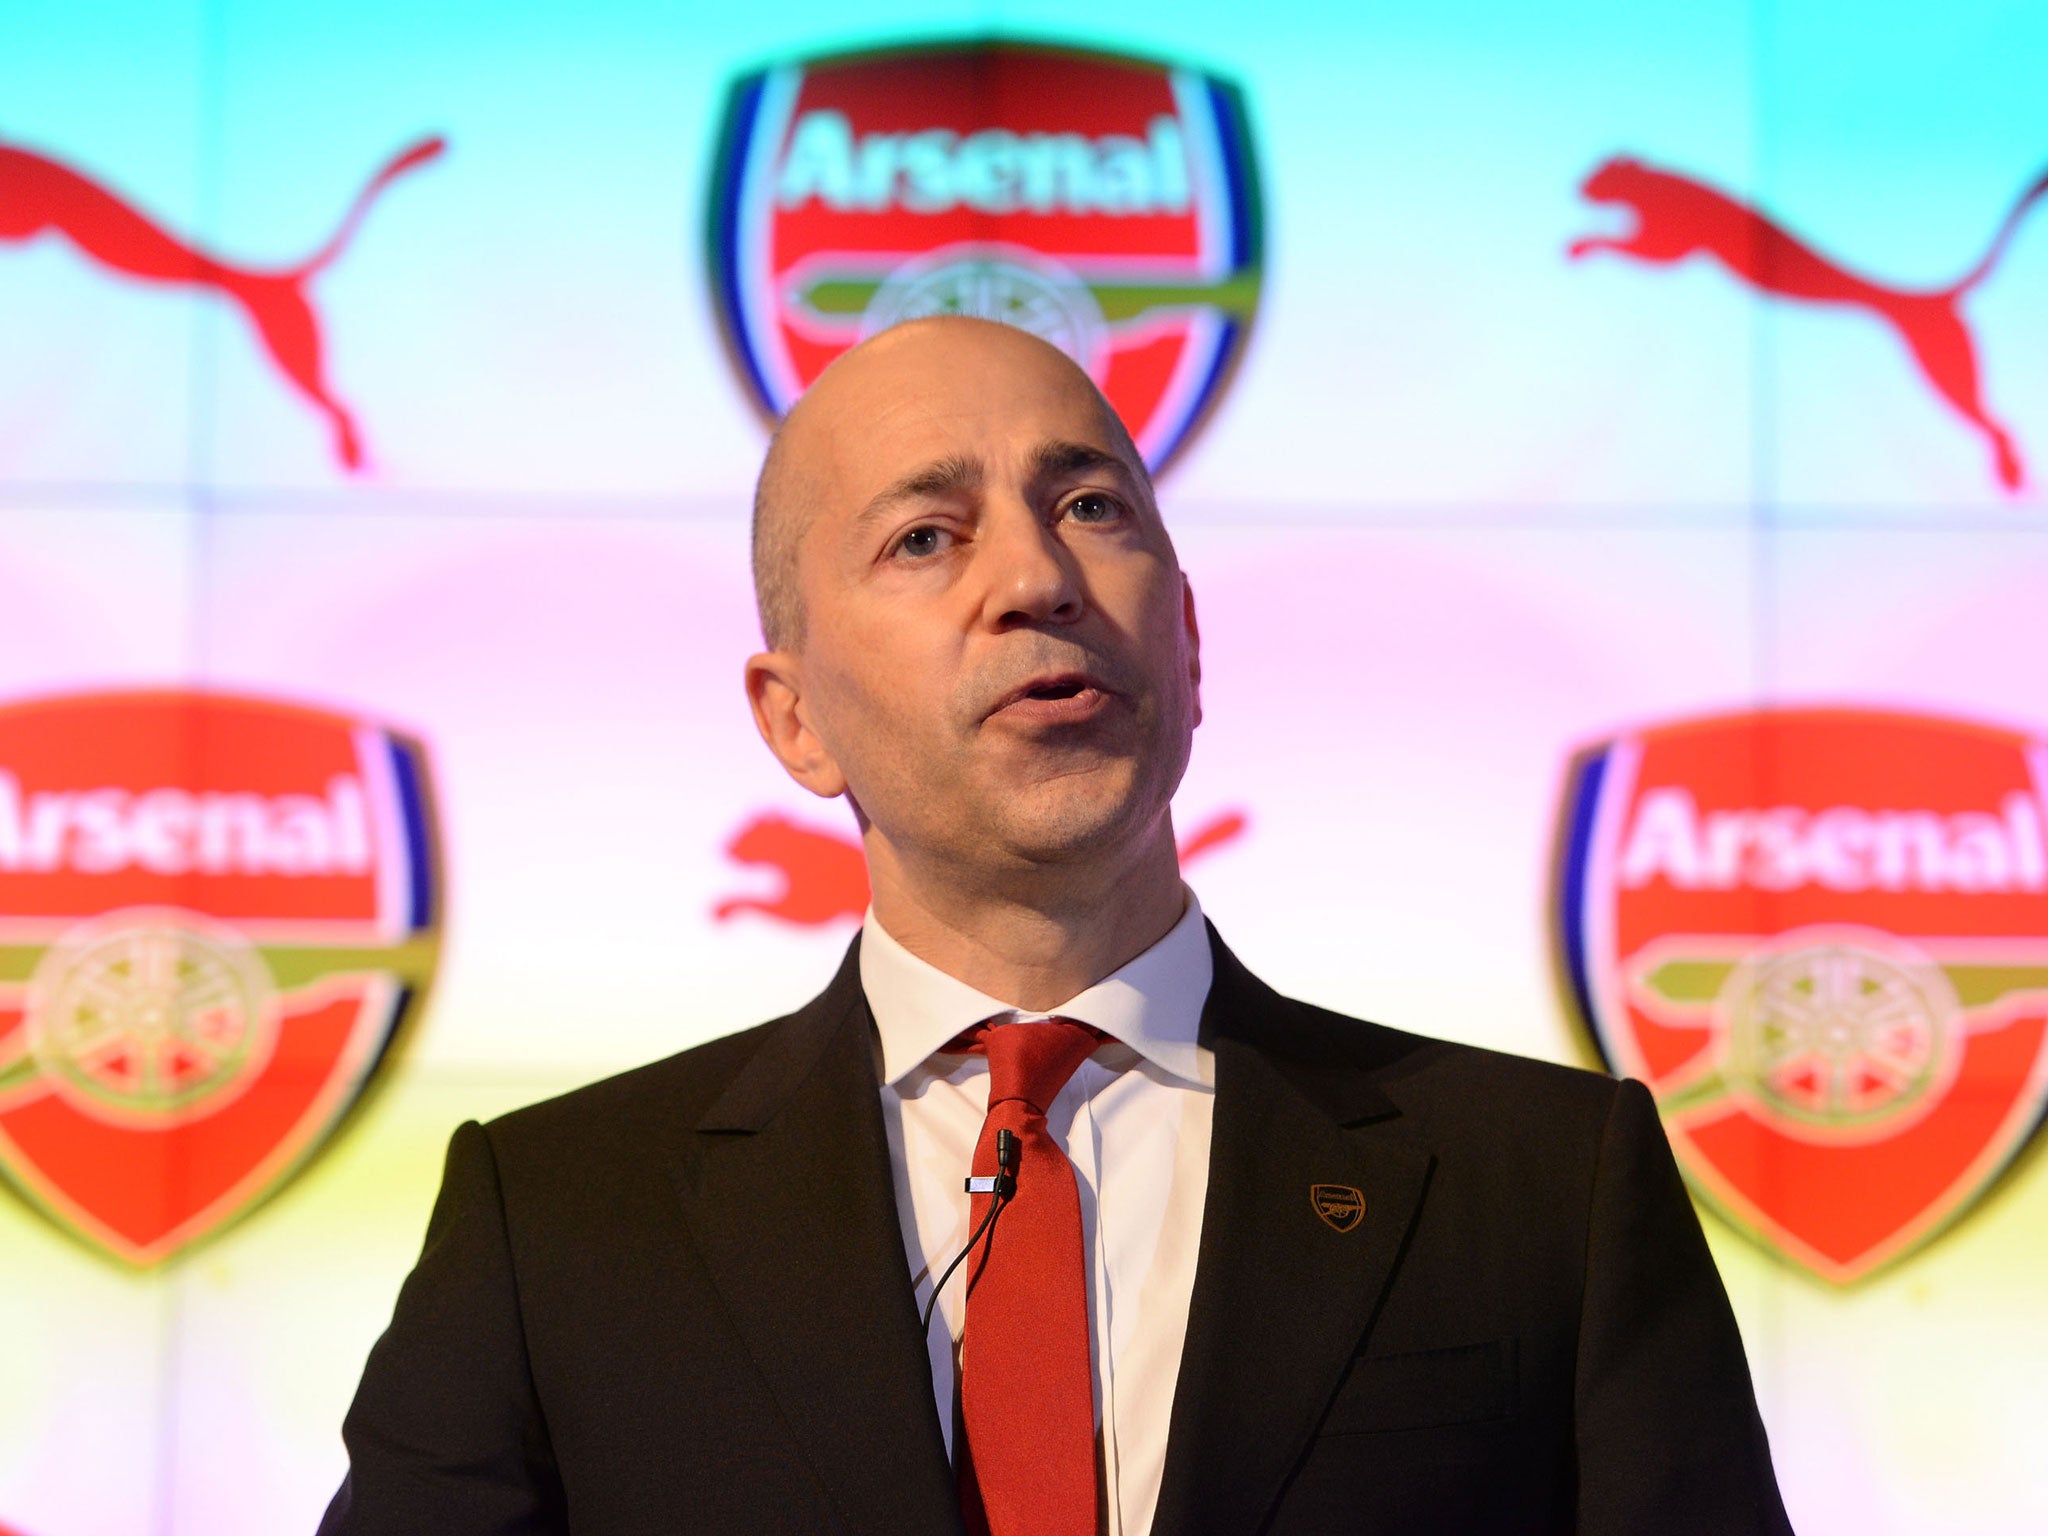 Ivan Gazidis the CEO of Arsenal